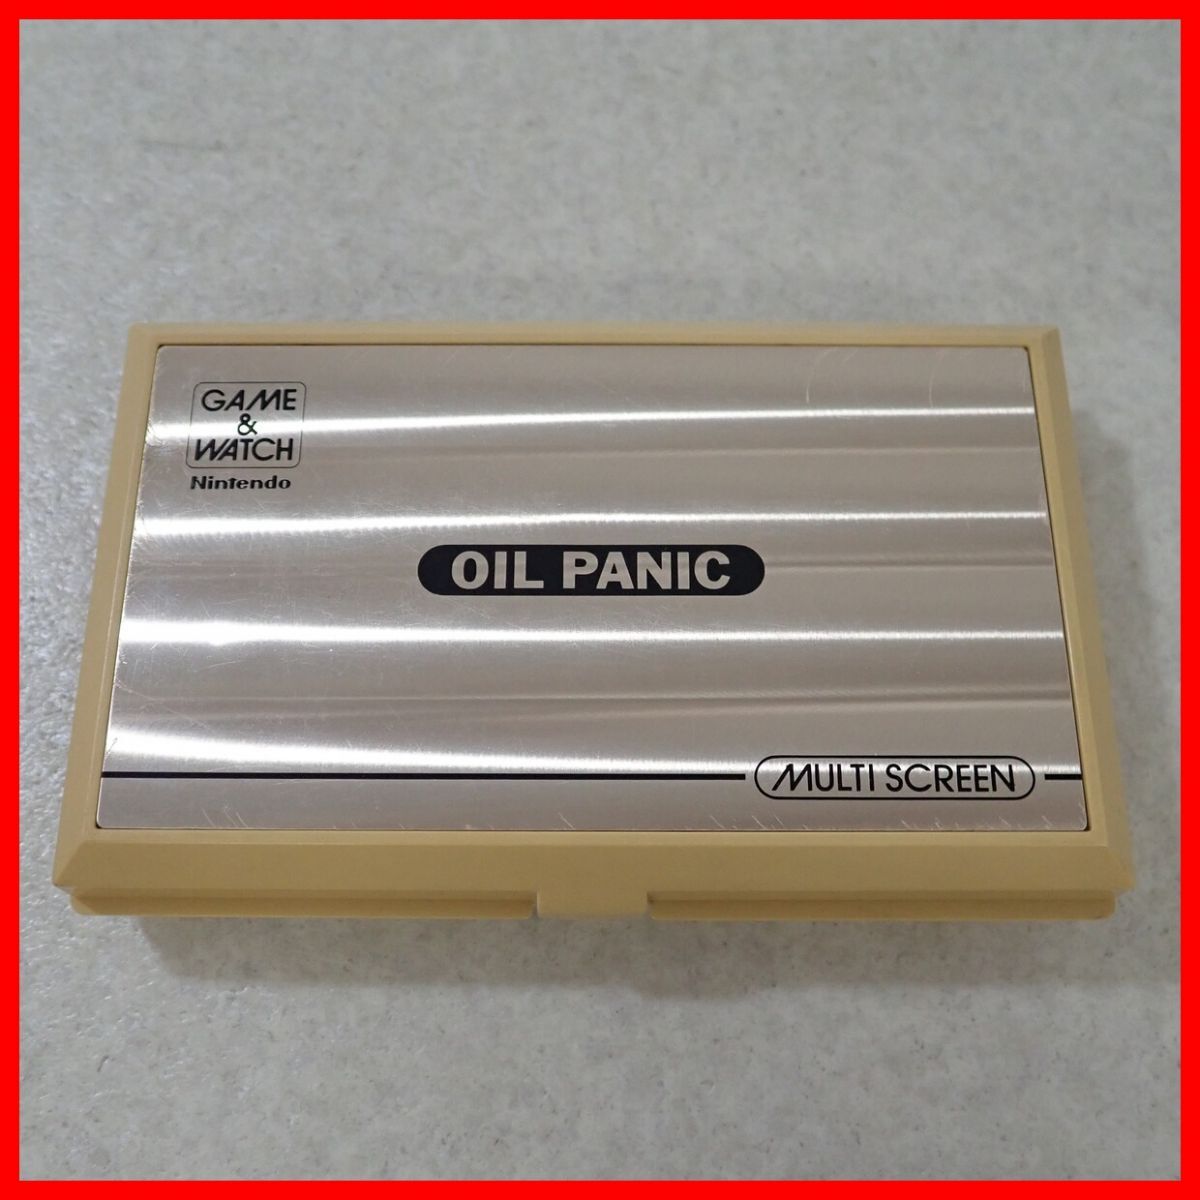  рабочий товар GAME&WATCH MULTI SCREEN игра & часы OIL PANIC масло Panic OP-51 Nintendo nintendo [10